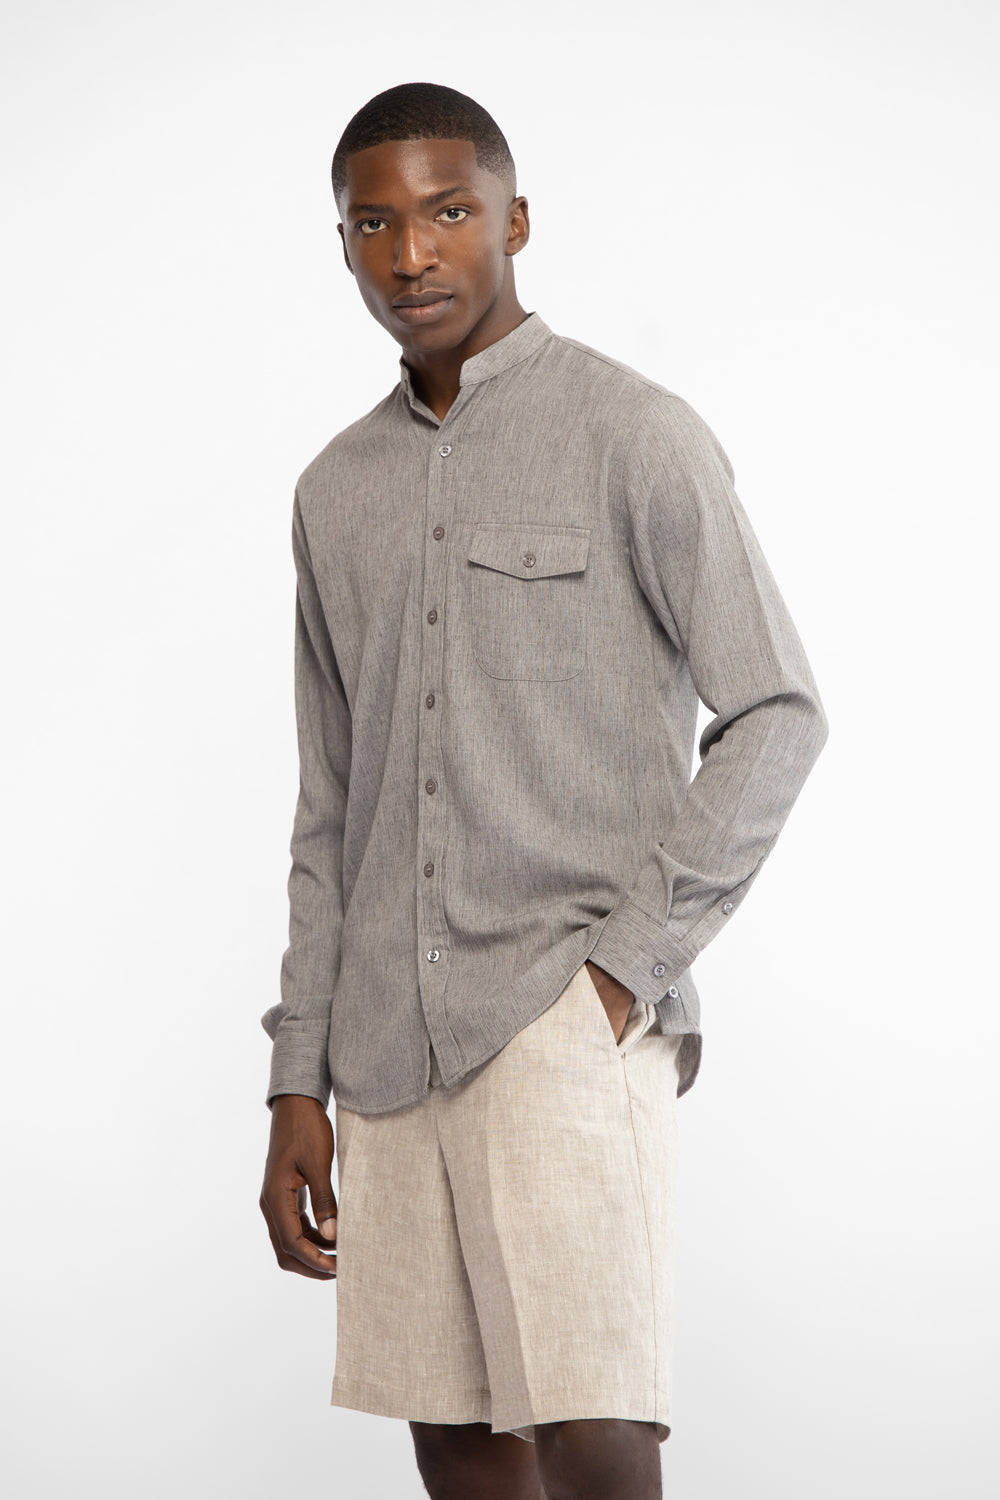 Men's white linen/cotton blend grandad collar shirt